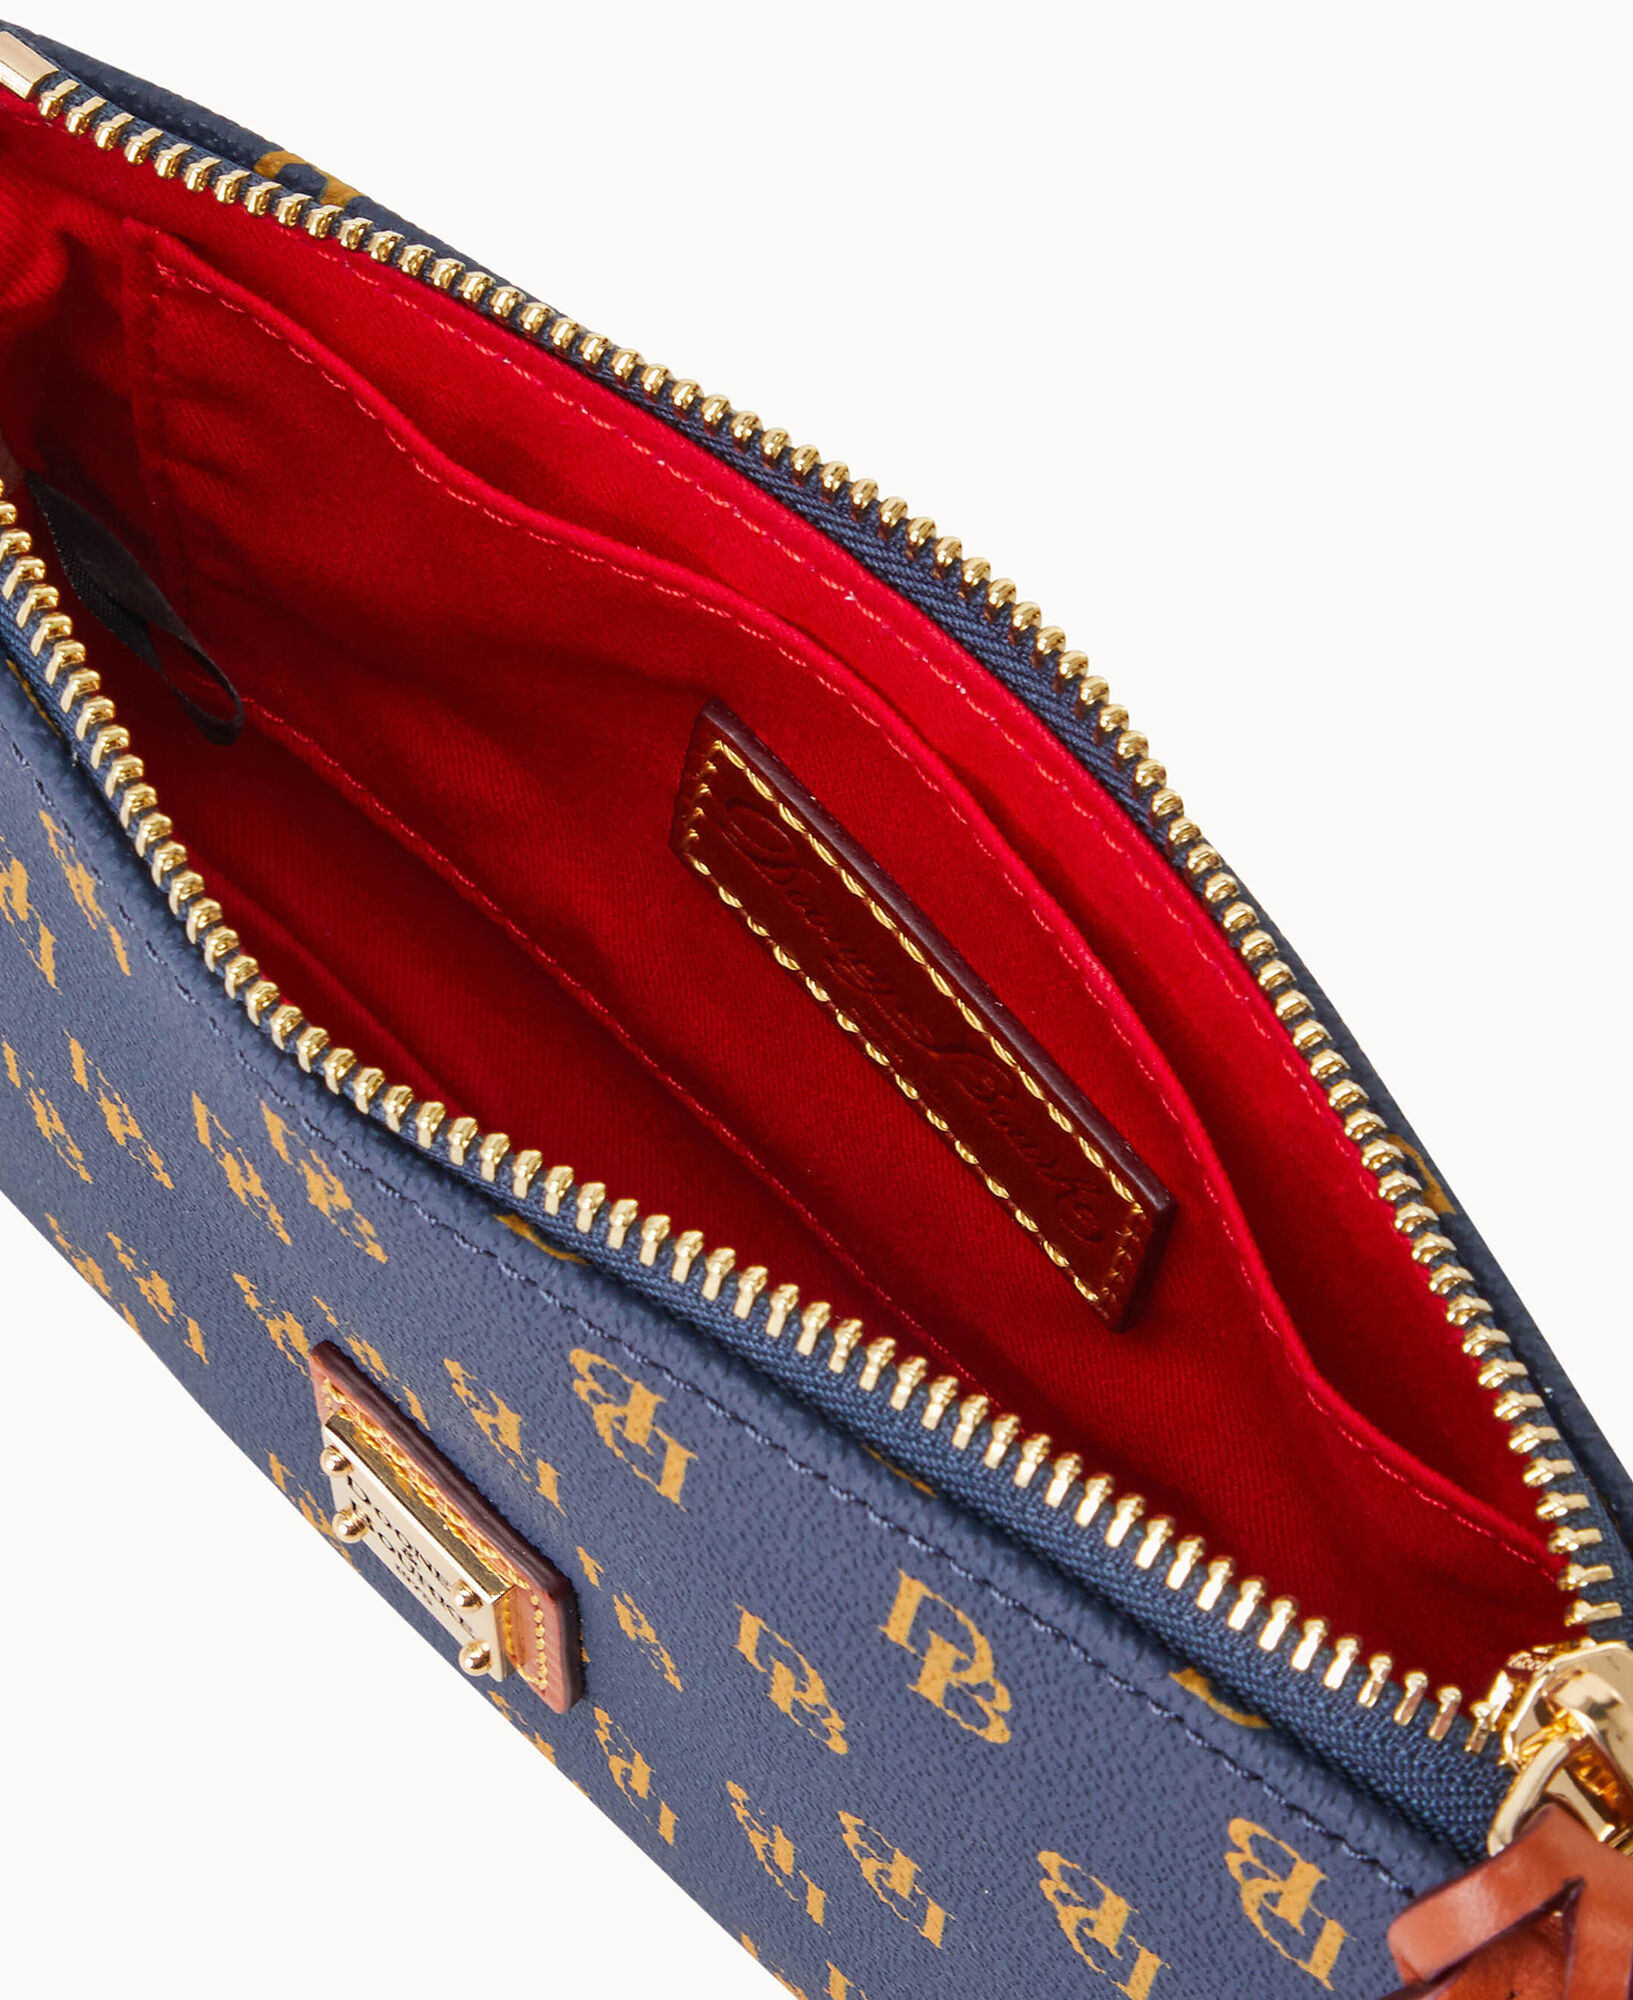 Dooney & Bourke Handbag, Saffiano Lexi Crossbody - Brown Tmoro: Handbags